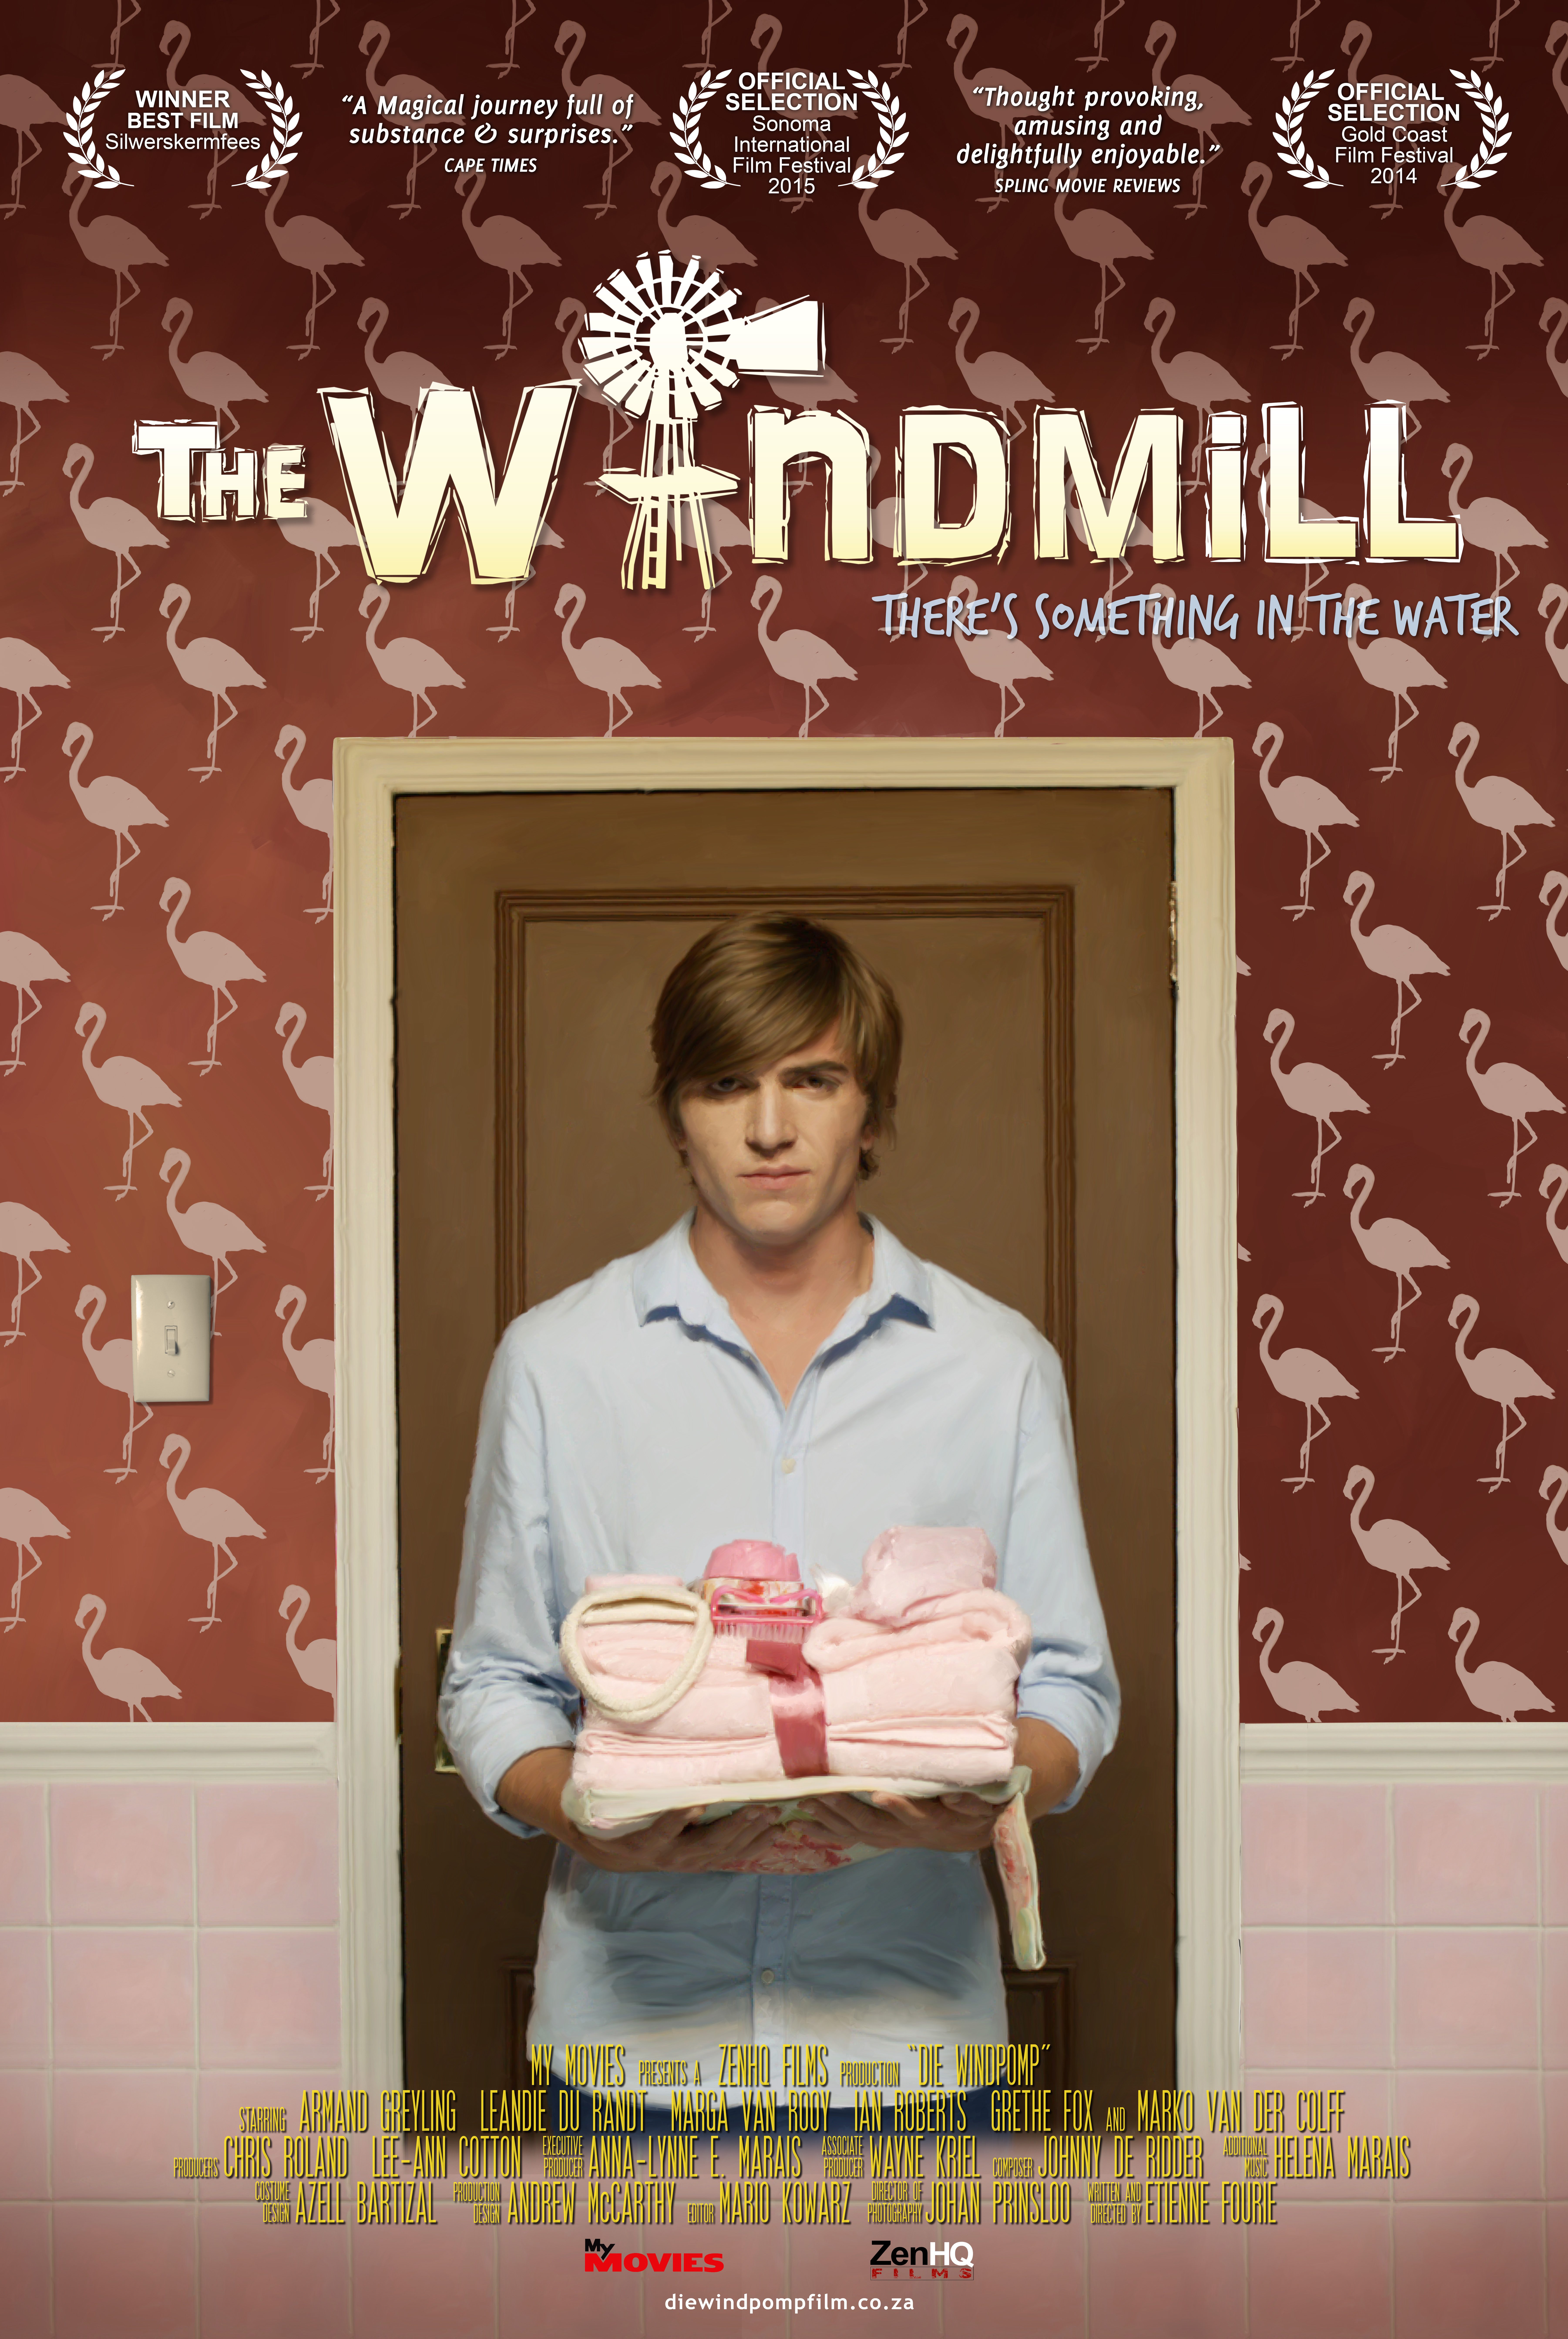 THE WINDMILL (Die Windpomp)